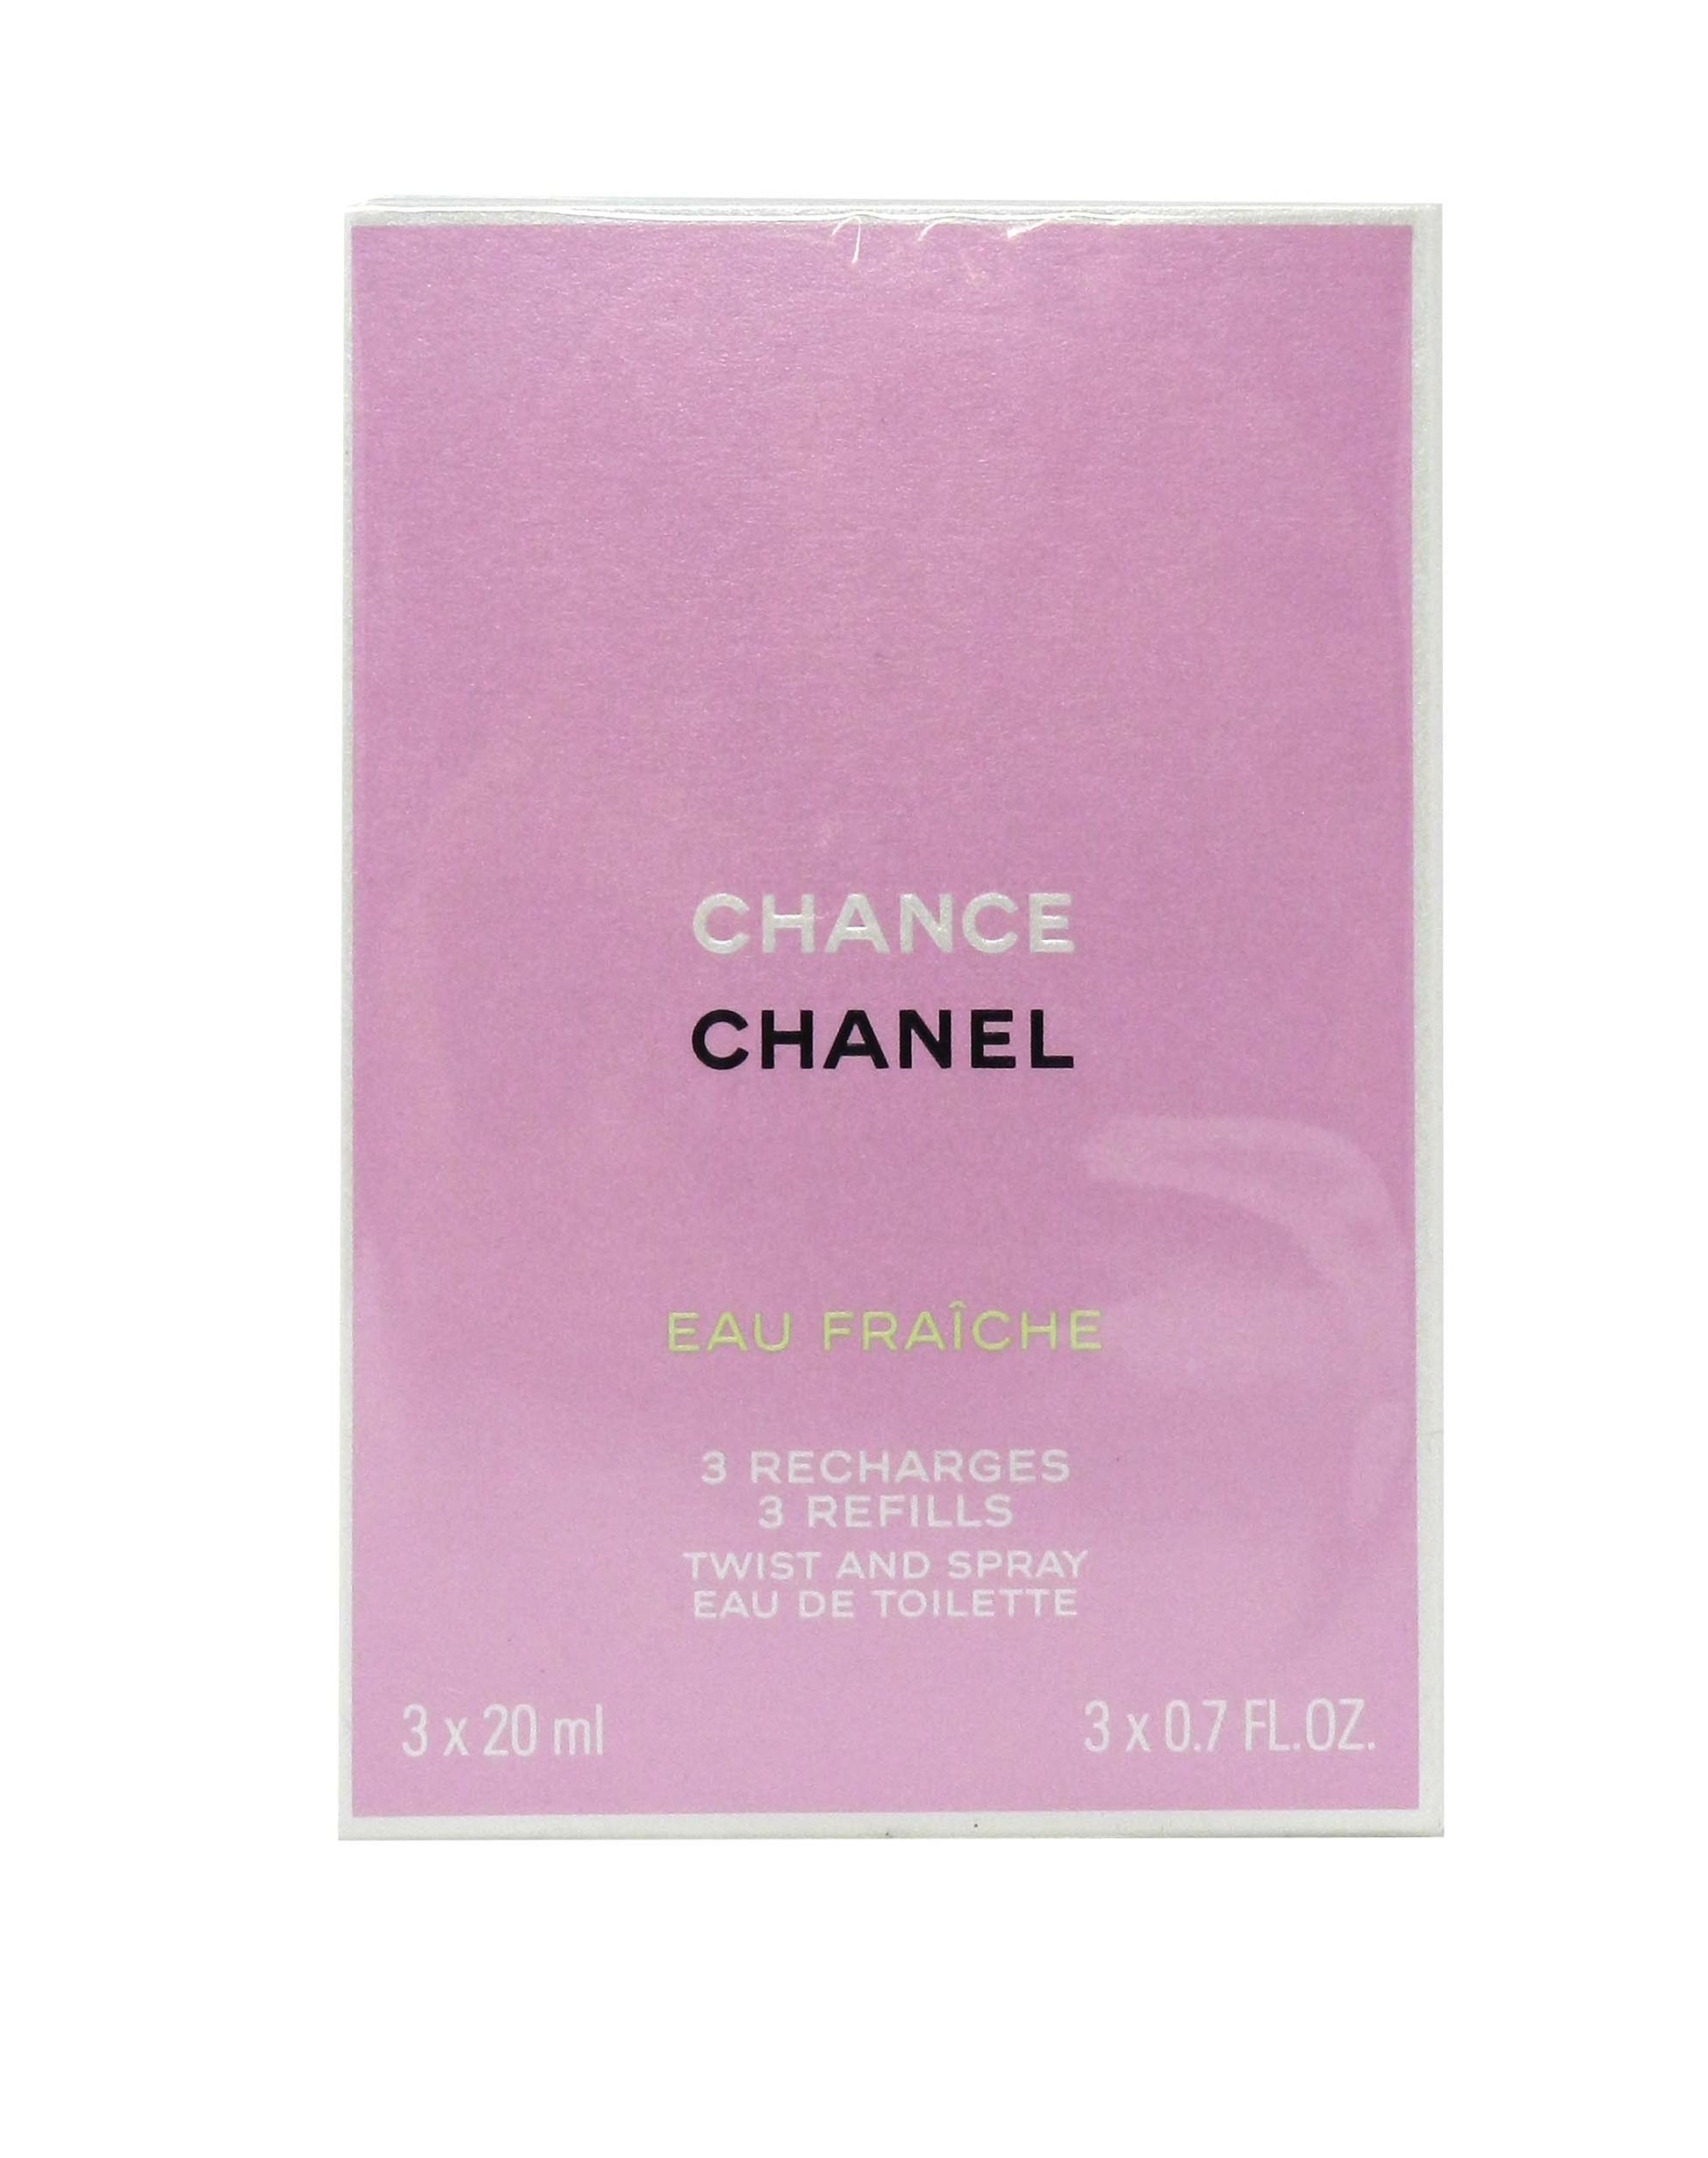 Chanel Chance Eau Fraiche Spray